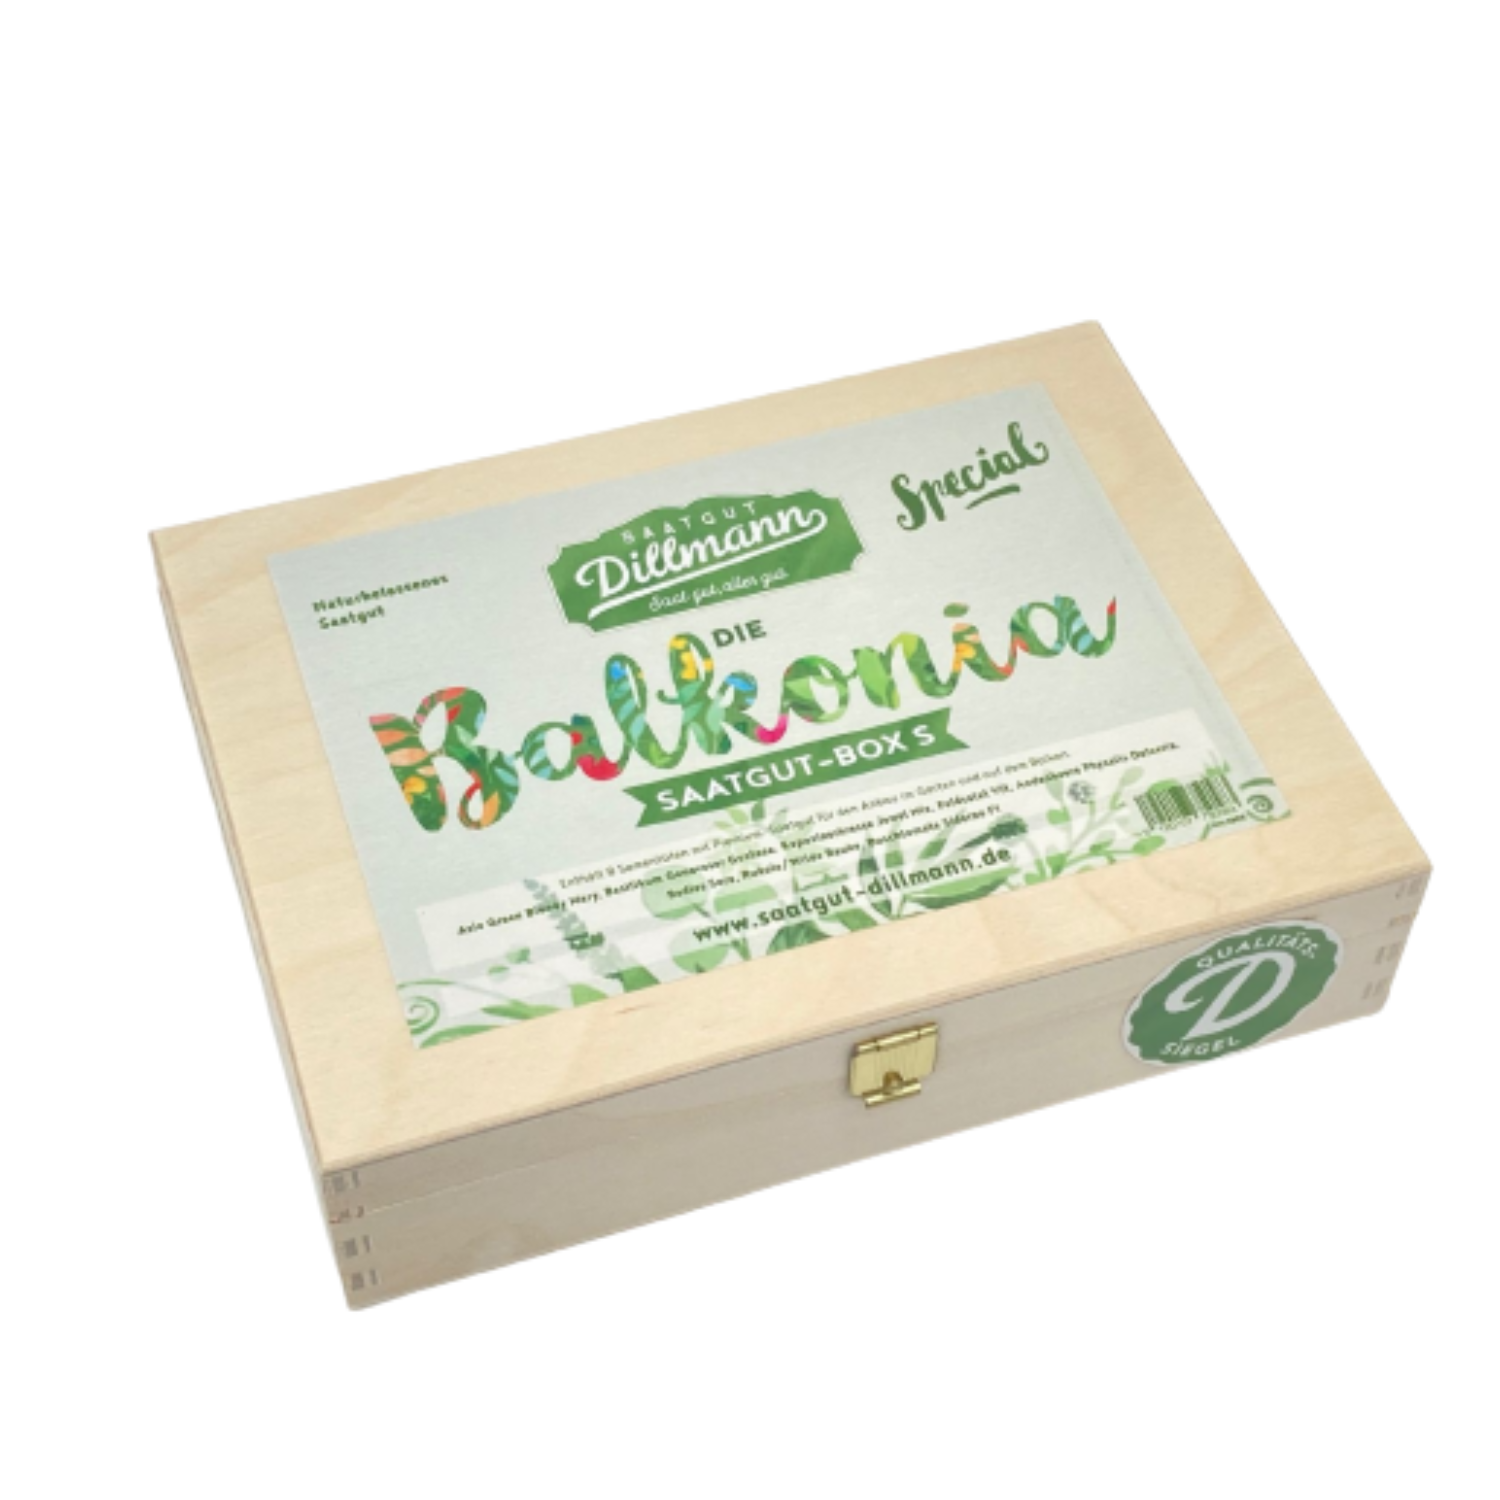 Saatgut-Holzbox S - Balkonia für Hobbygärtner